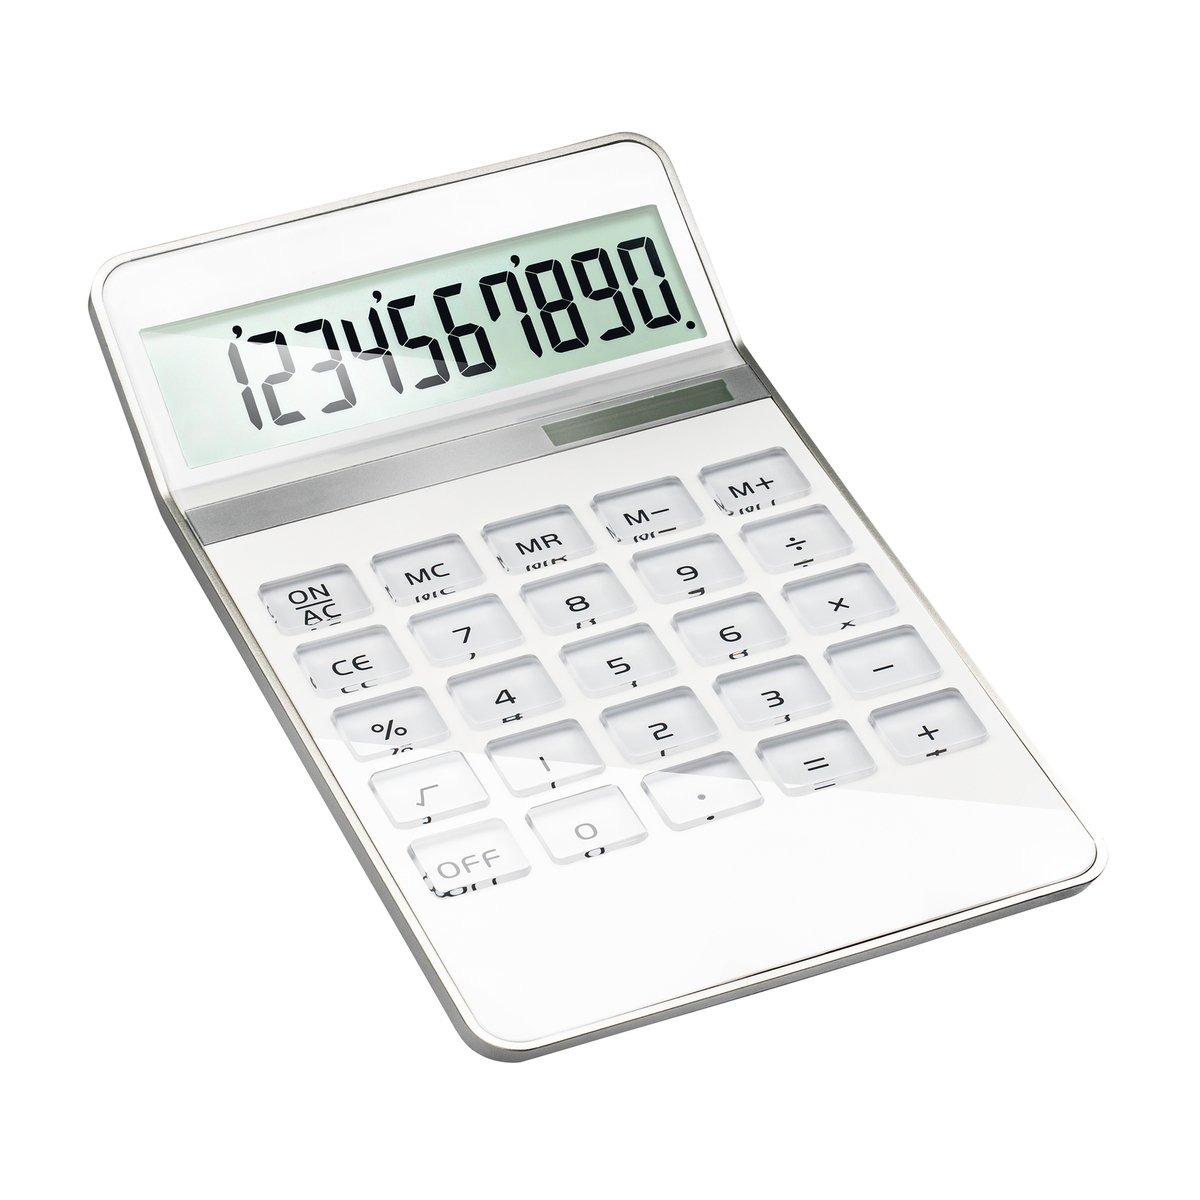 Solar calculator REEVES-NEAPEL white